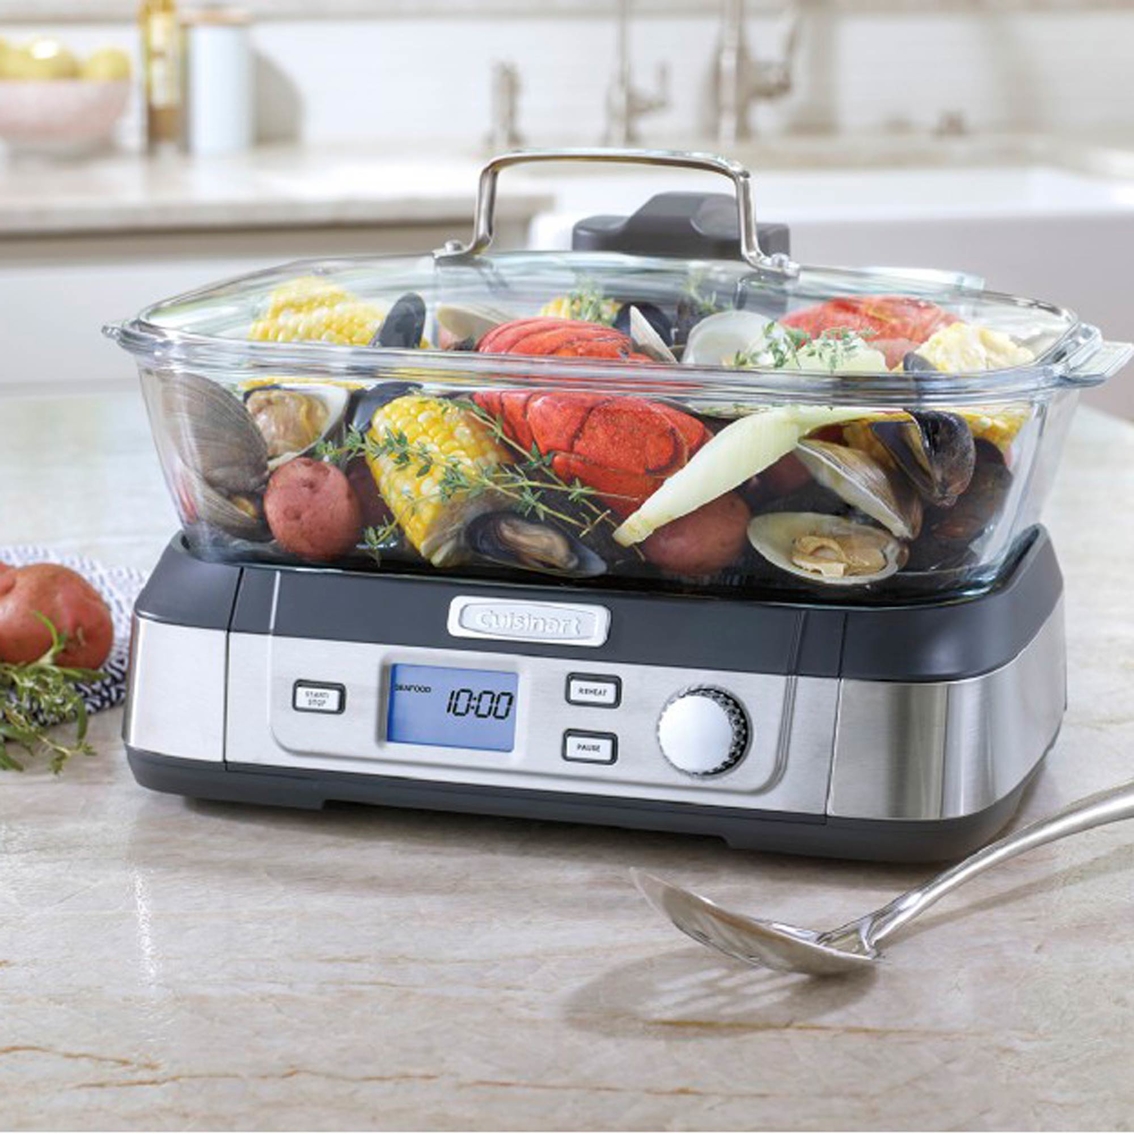 Cuisinart Cookfresh Digital Glass Steamer | Toasters & Ovens ...